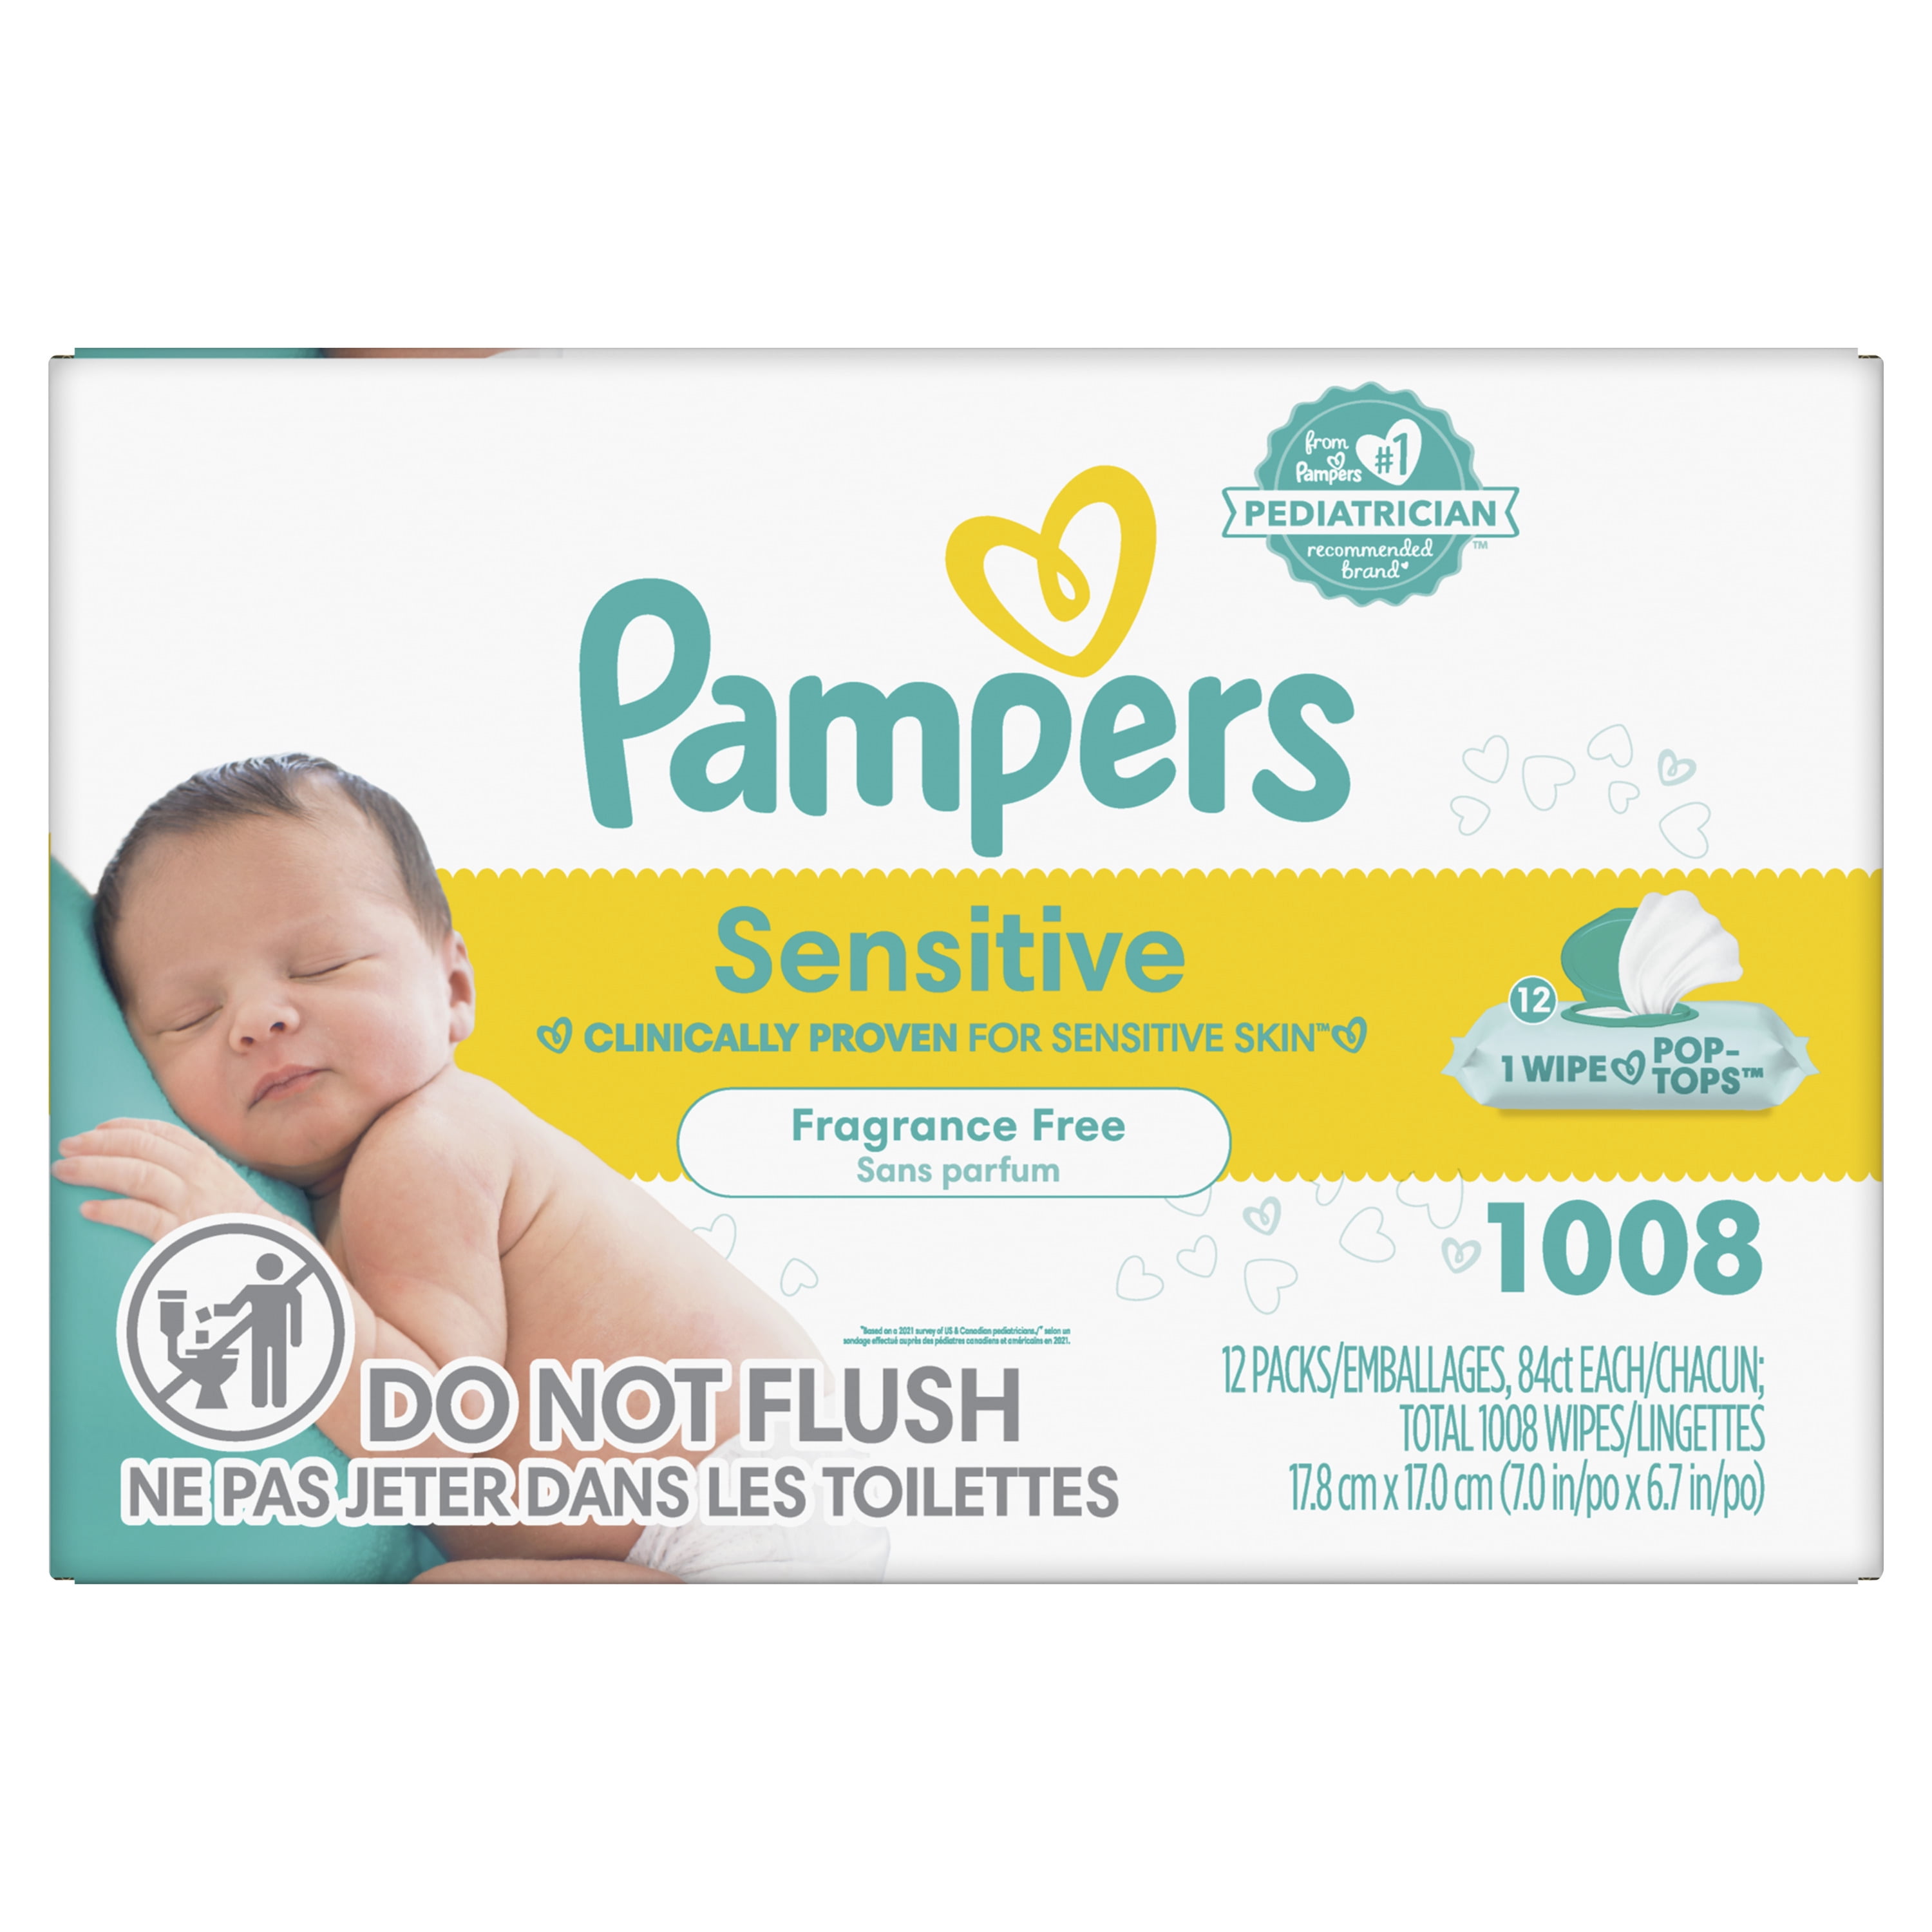 Pampers Sensitive Toallitas húmedas a base de agua para bebés,  hipoalergénicas y sin perfume, SG_B079V67BFW_US, 1